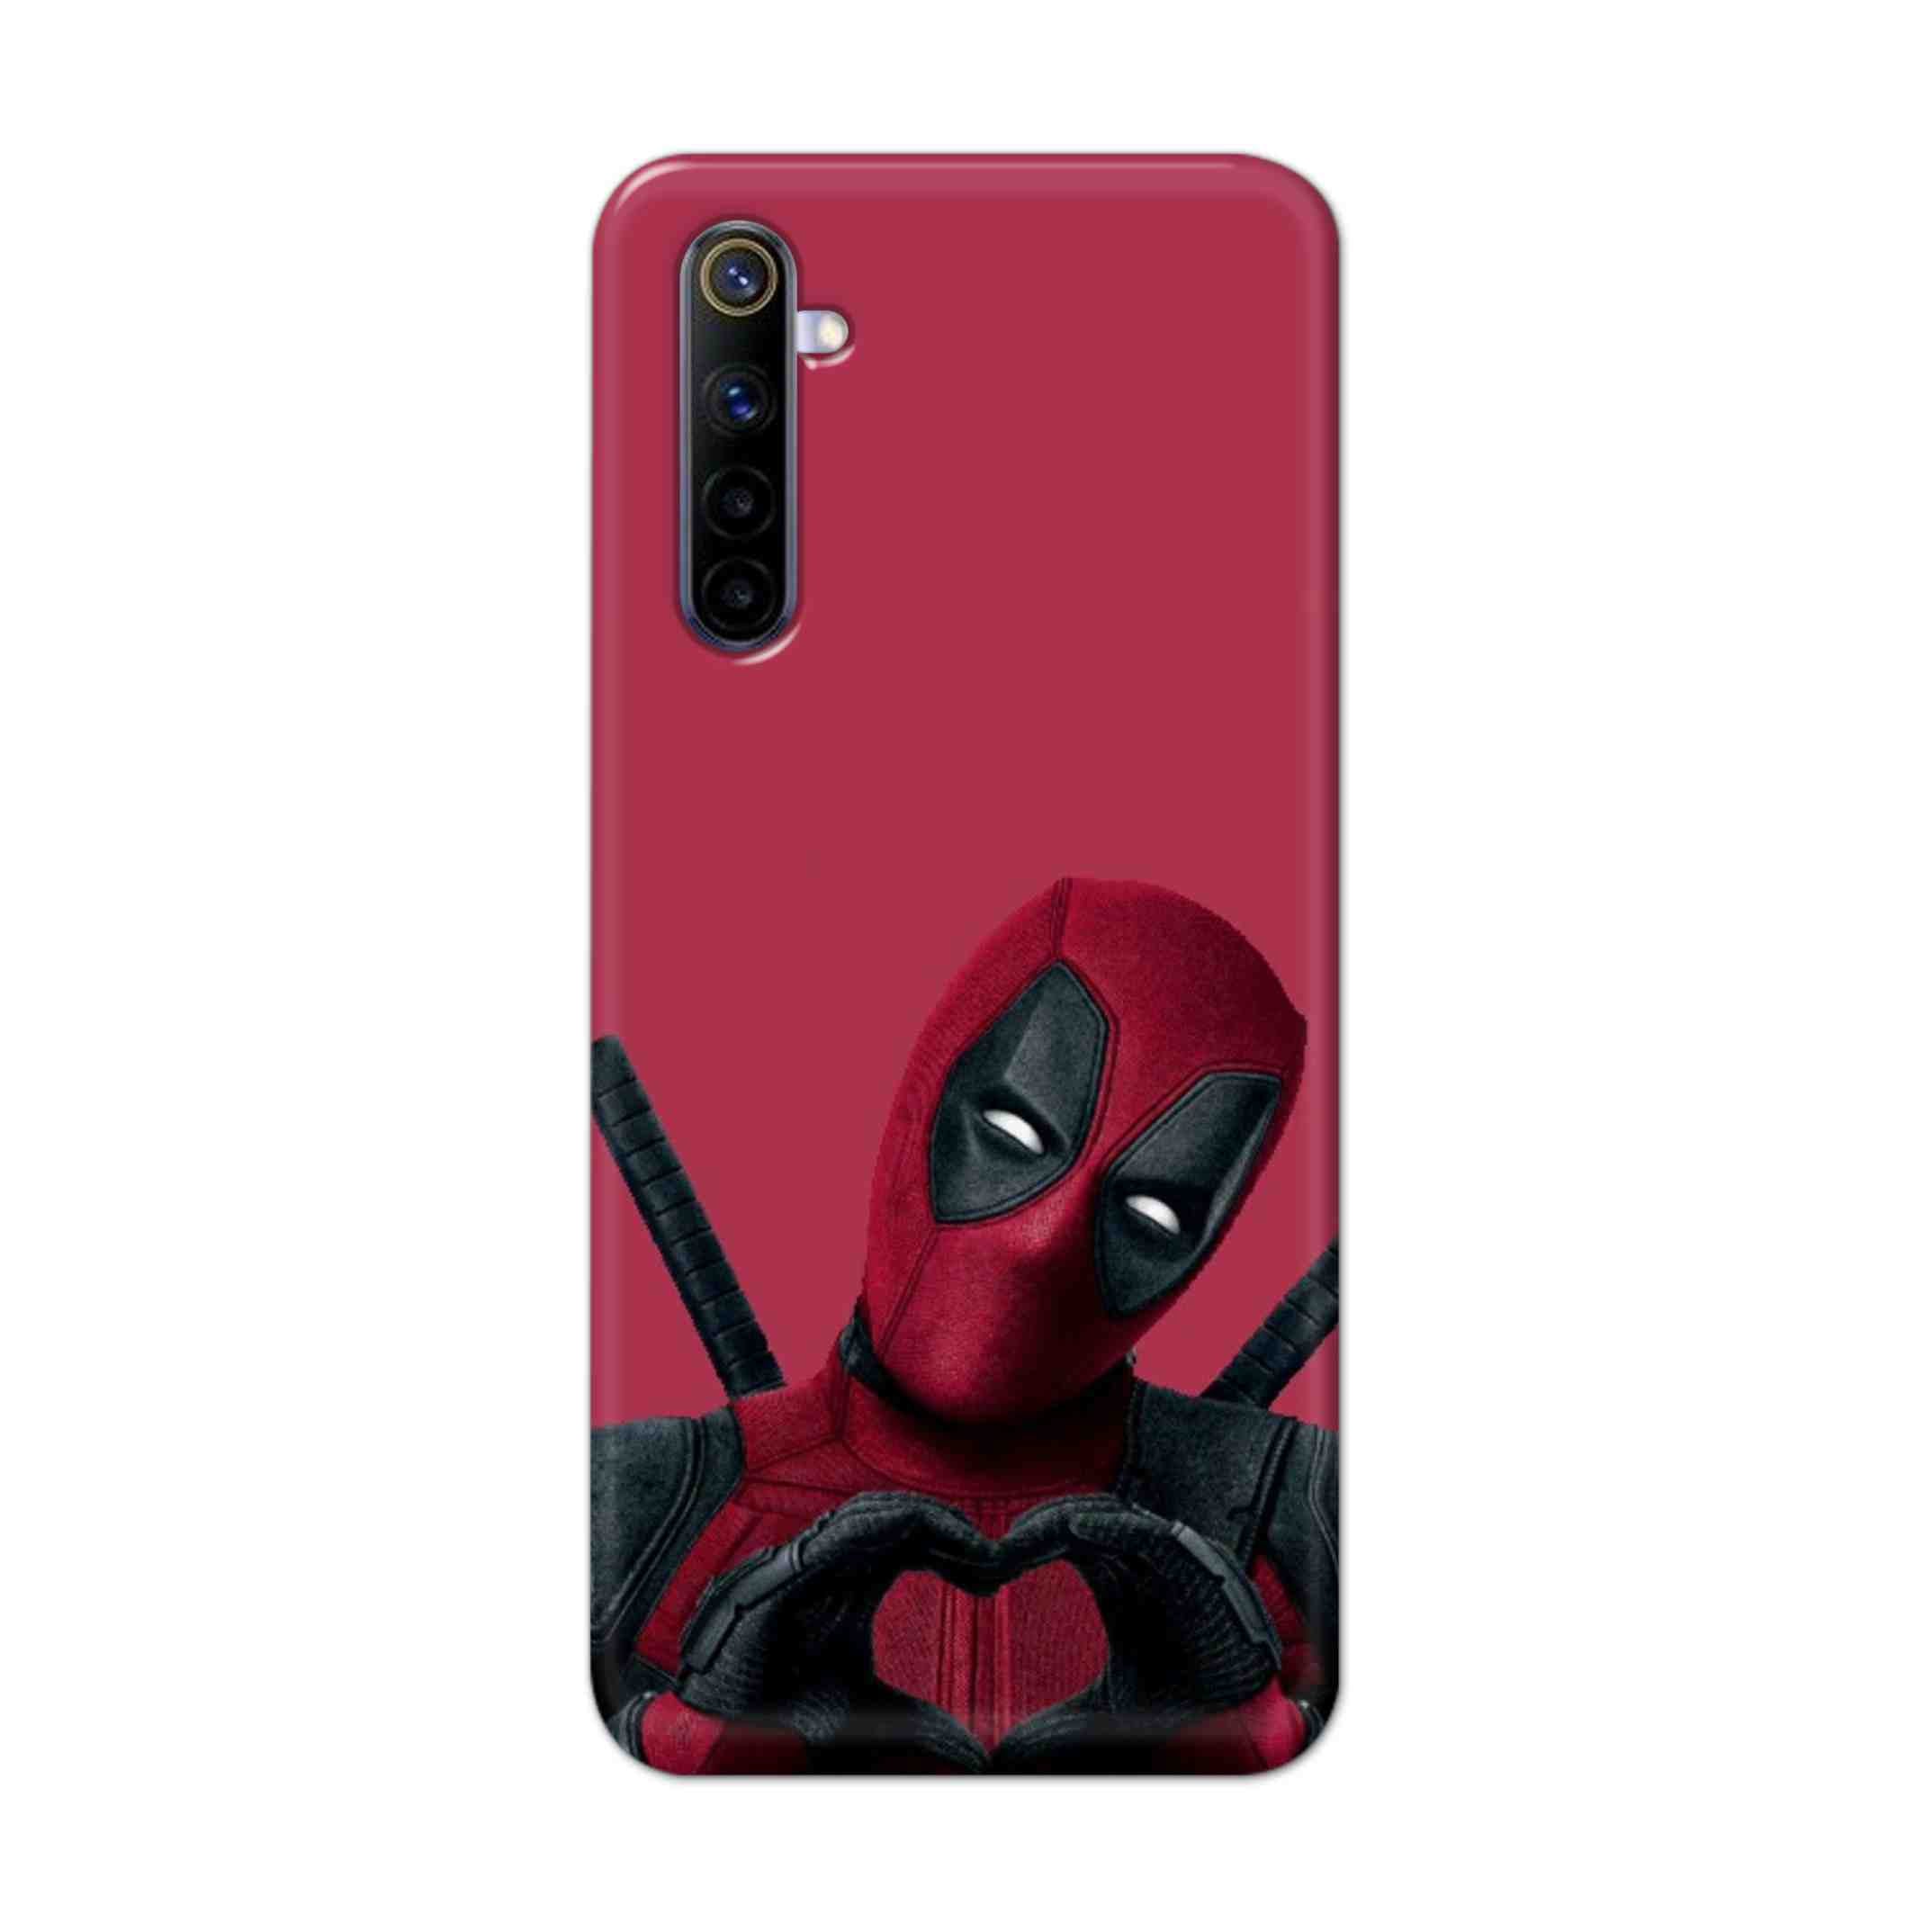 Buy Deadpool Heart Hard Back Mobile Phone Case Cover For REALME 6 PRO Online